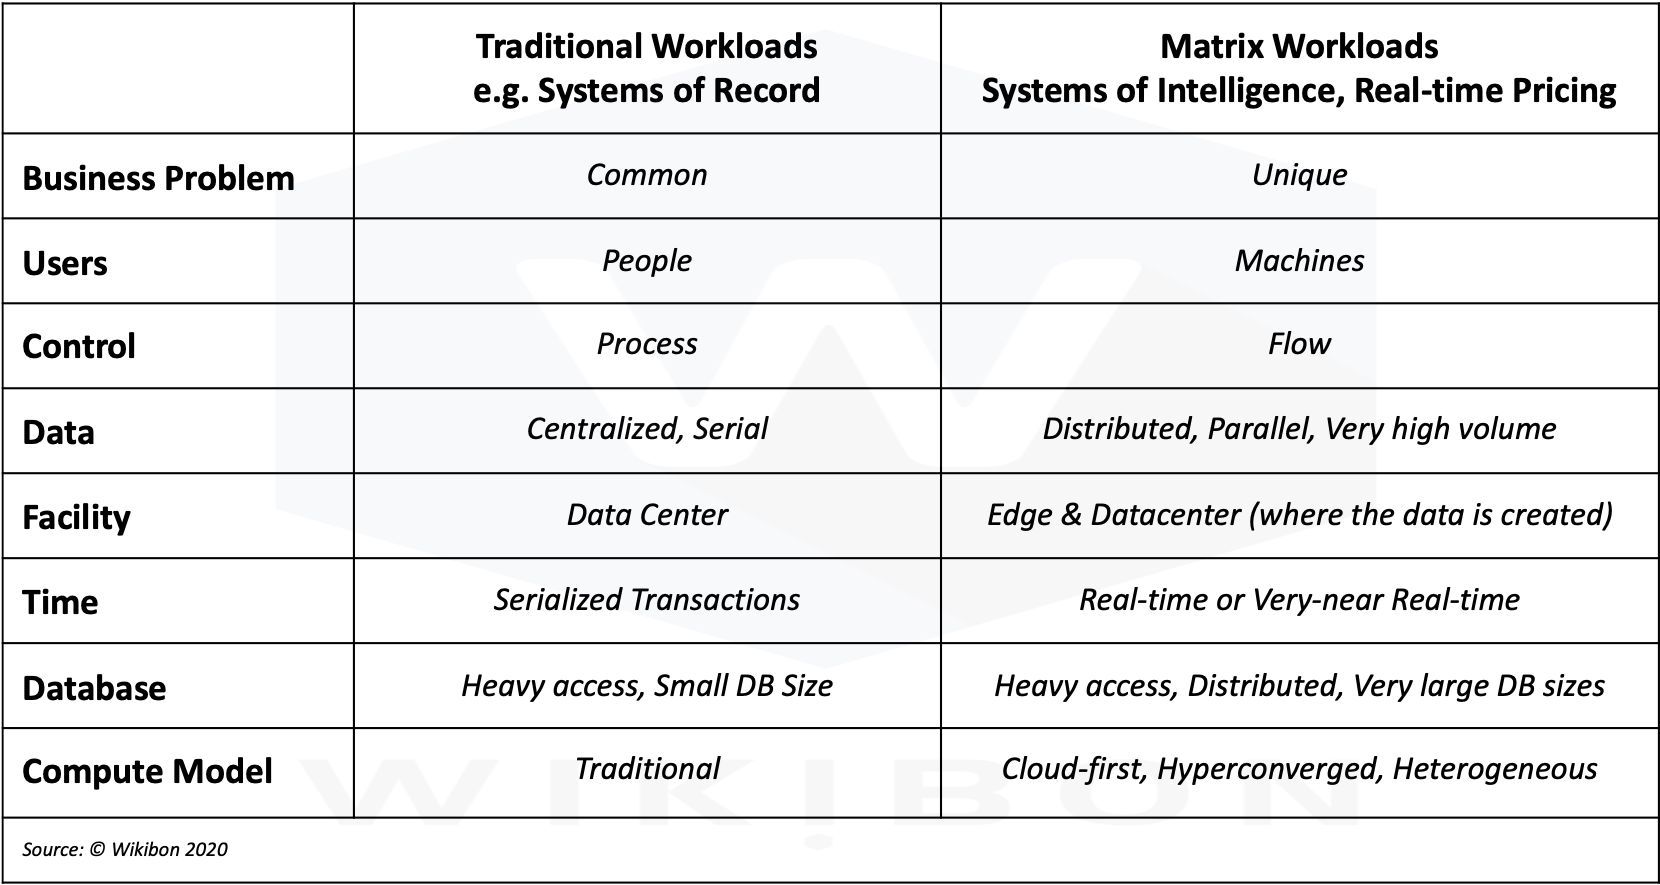 Matrix vs. Traditional Workloads